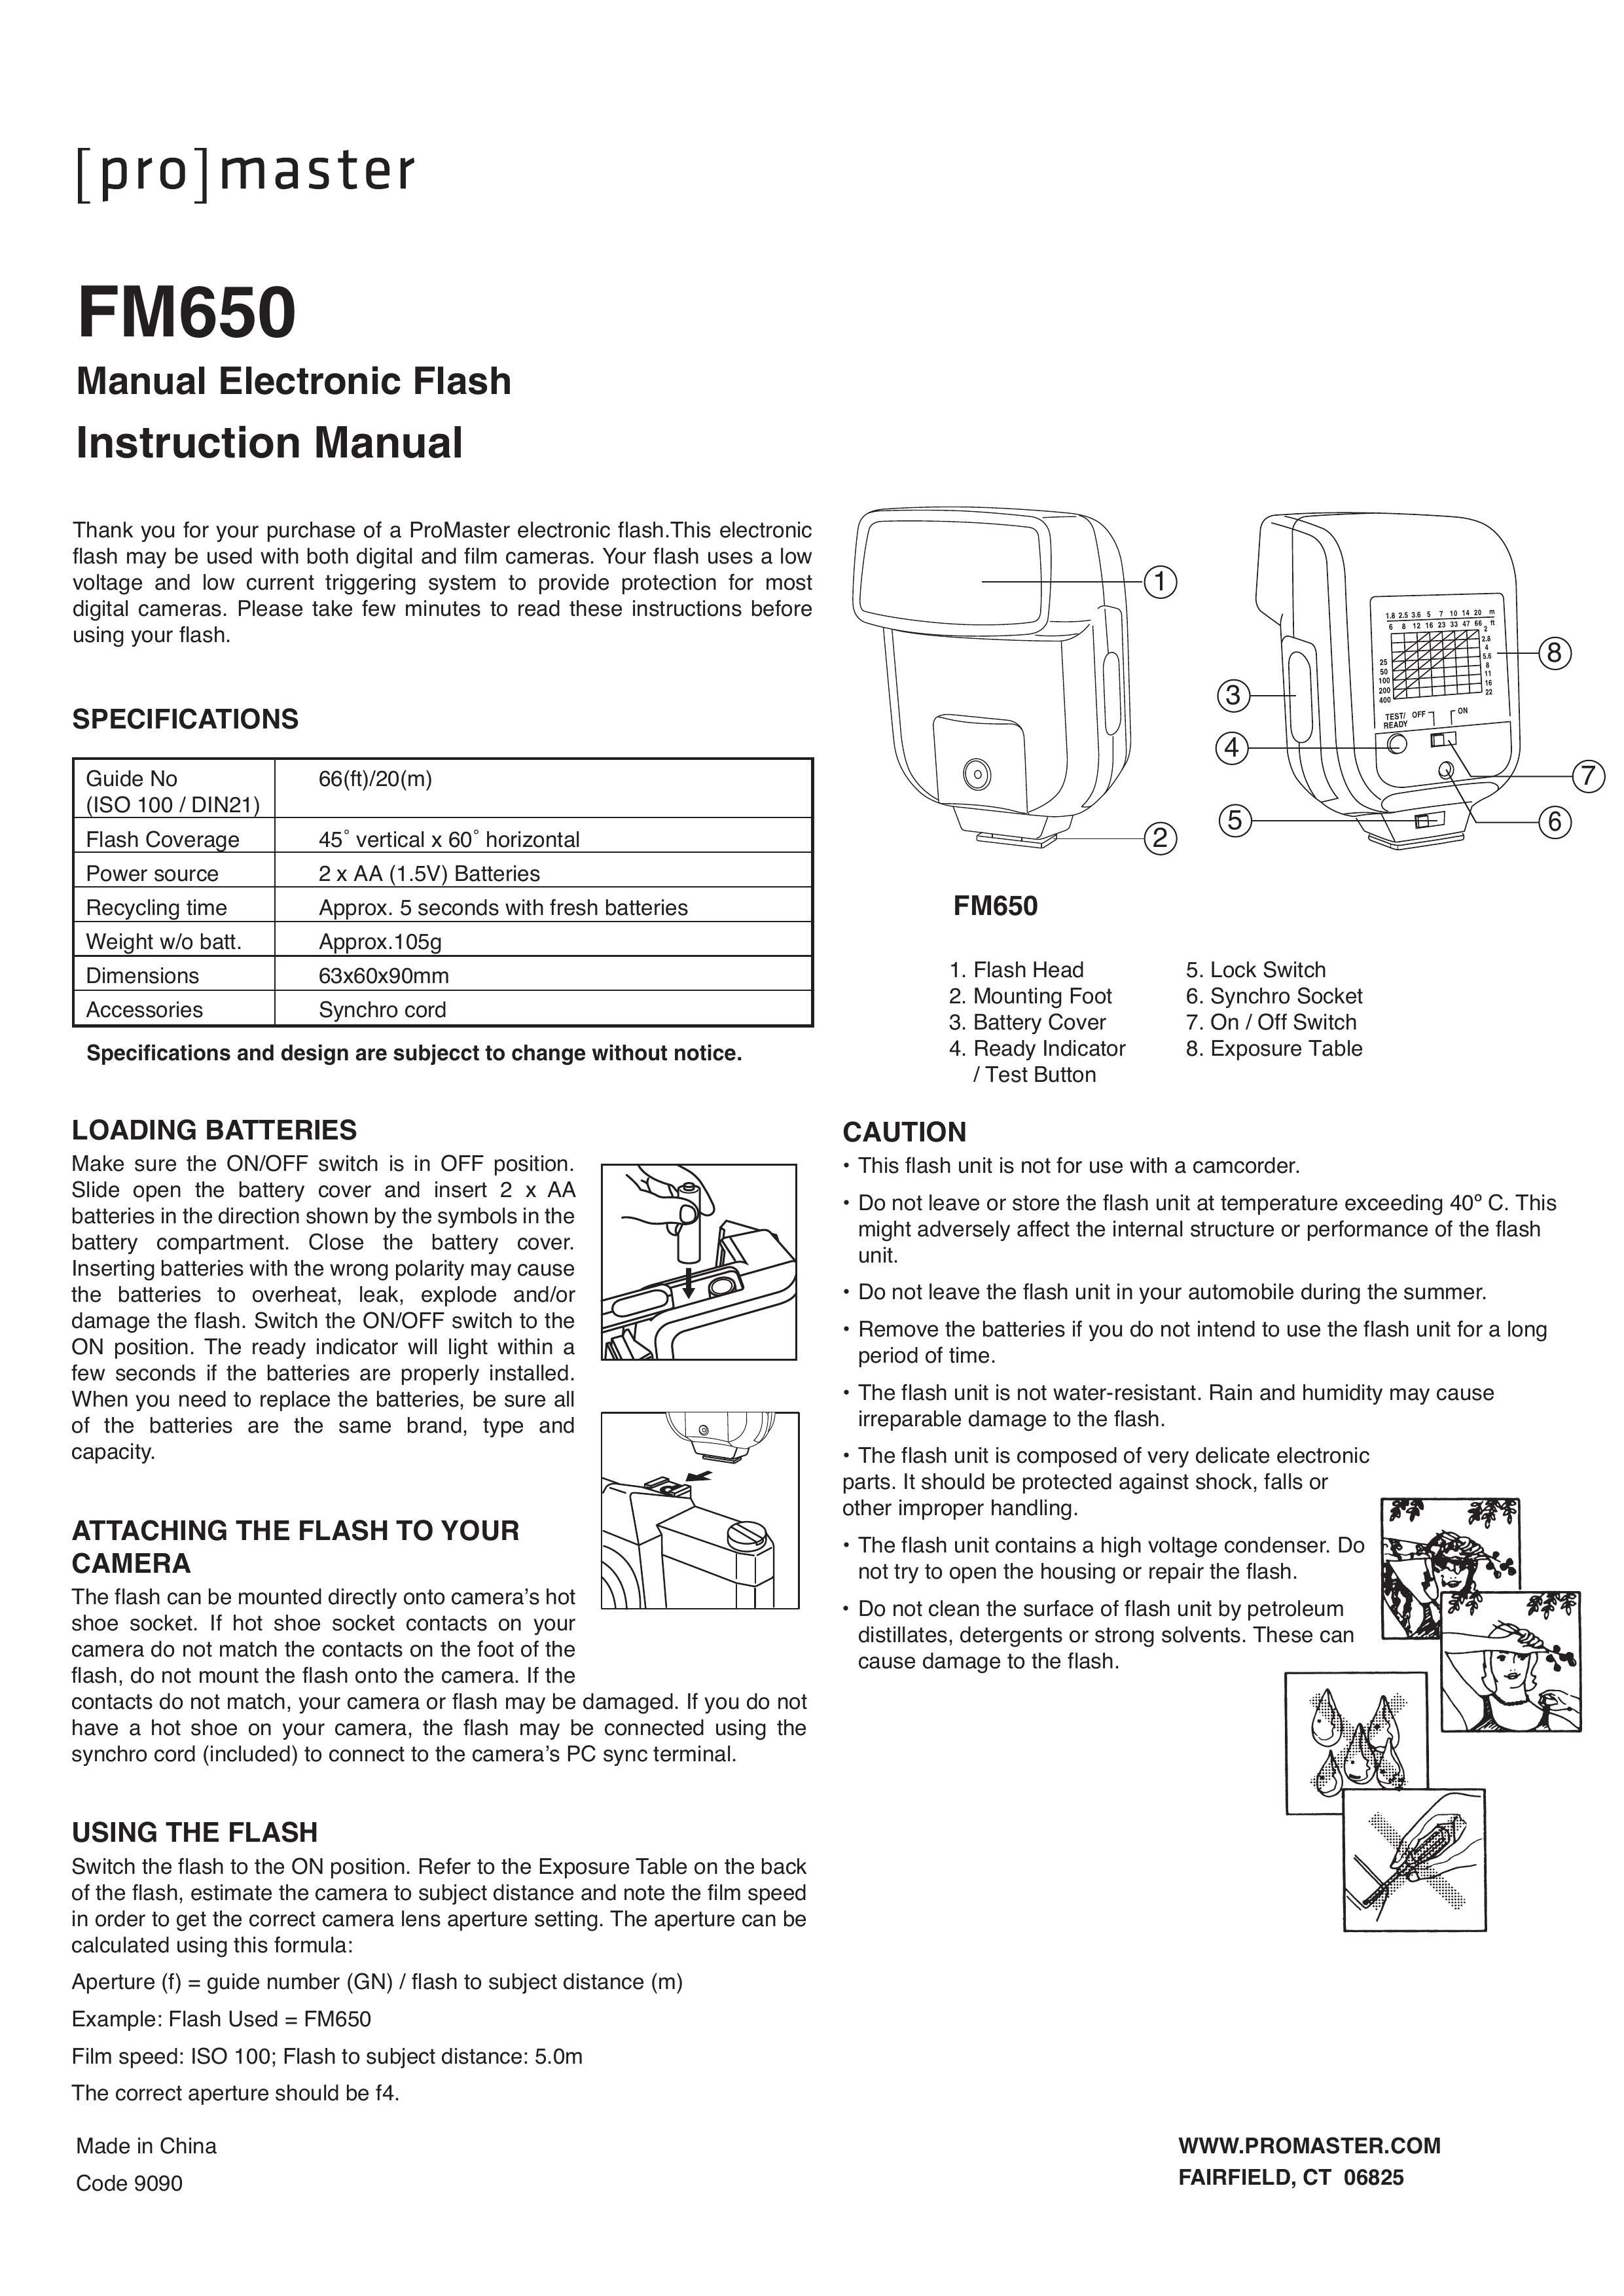 ProMaster FM650 Camera Flash User Manual